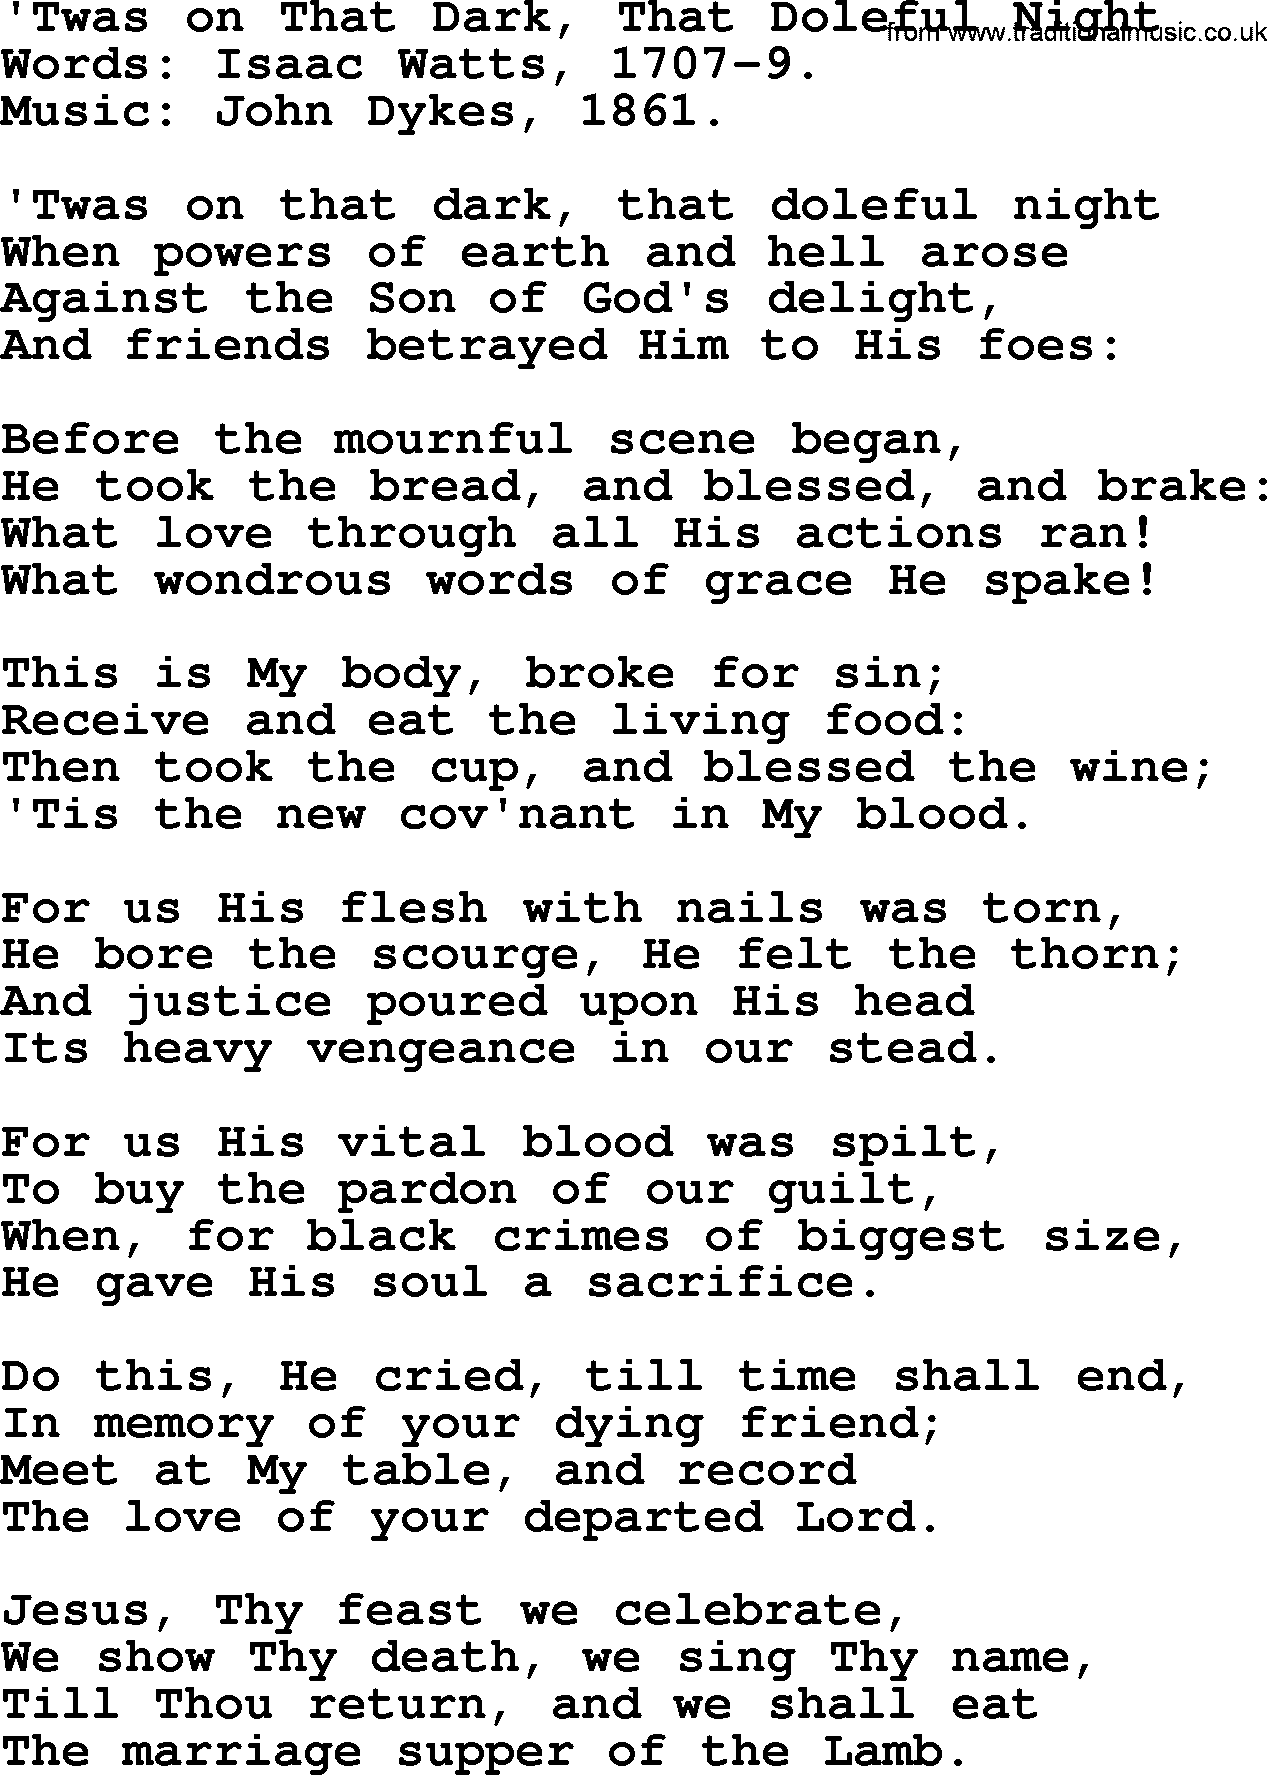 Isaac Watts Christian hymn: 'Twas on That Dark, That Doleful Night- lyricss